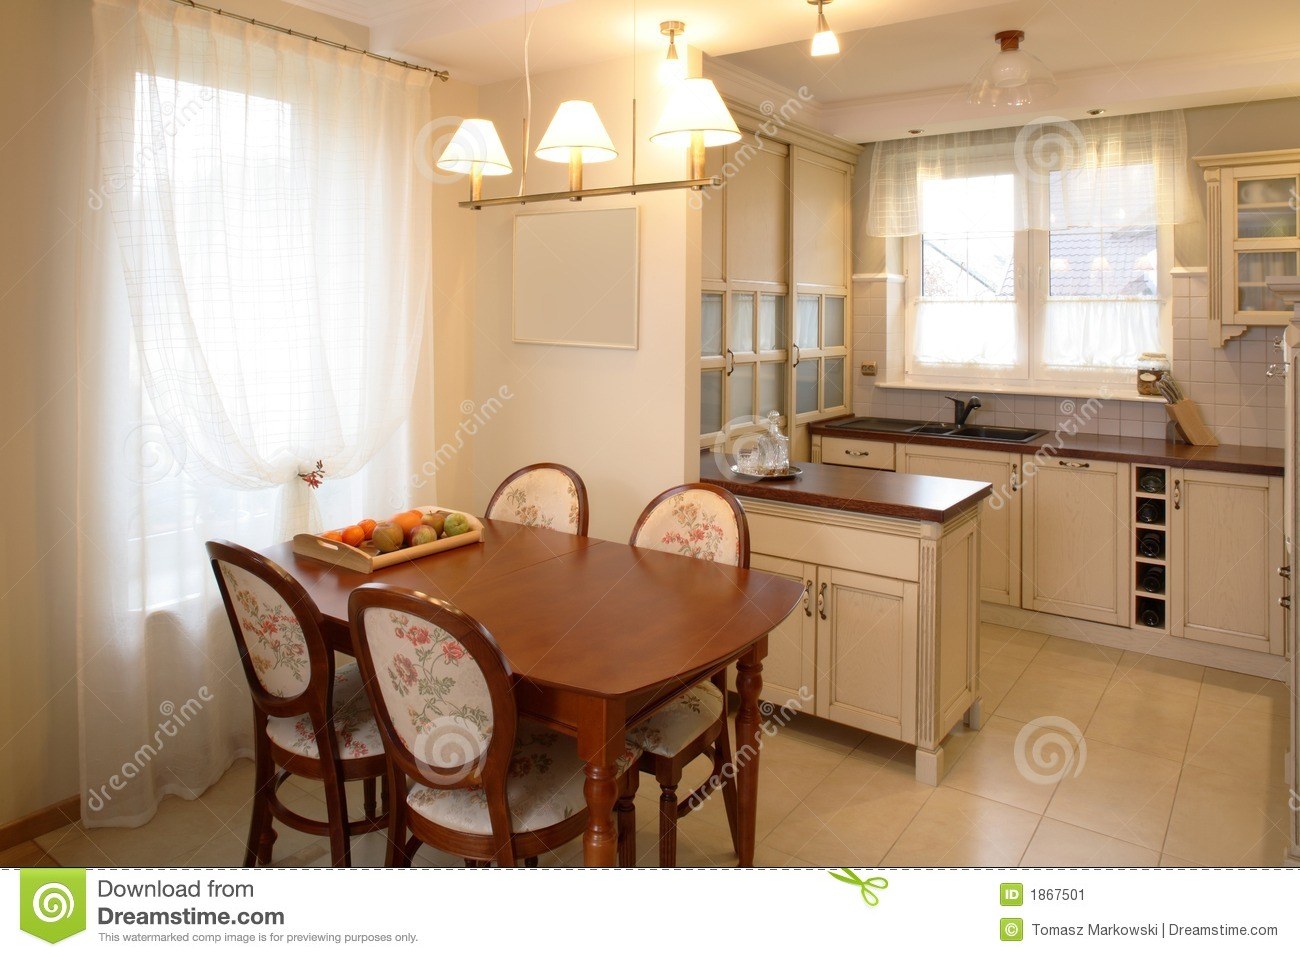 расстановка мебели в кухне с двумя окнами